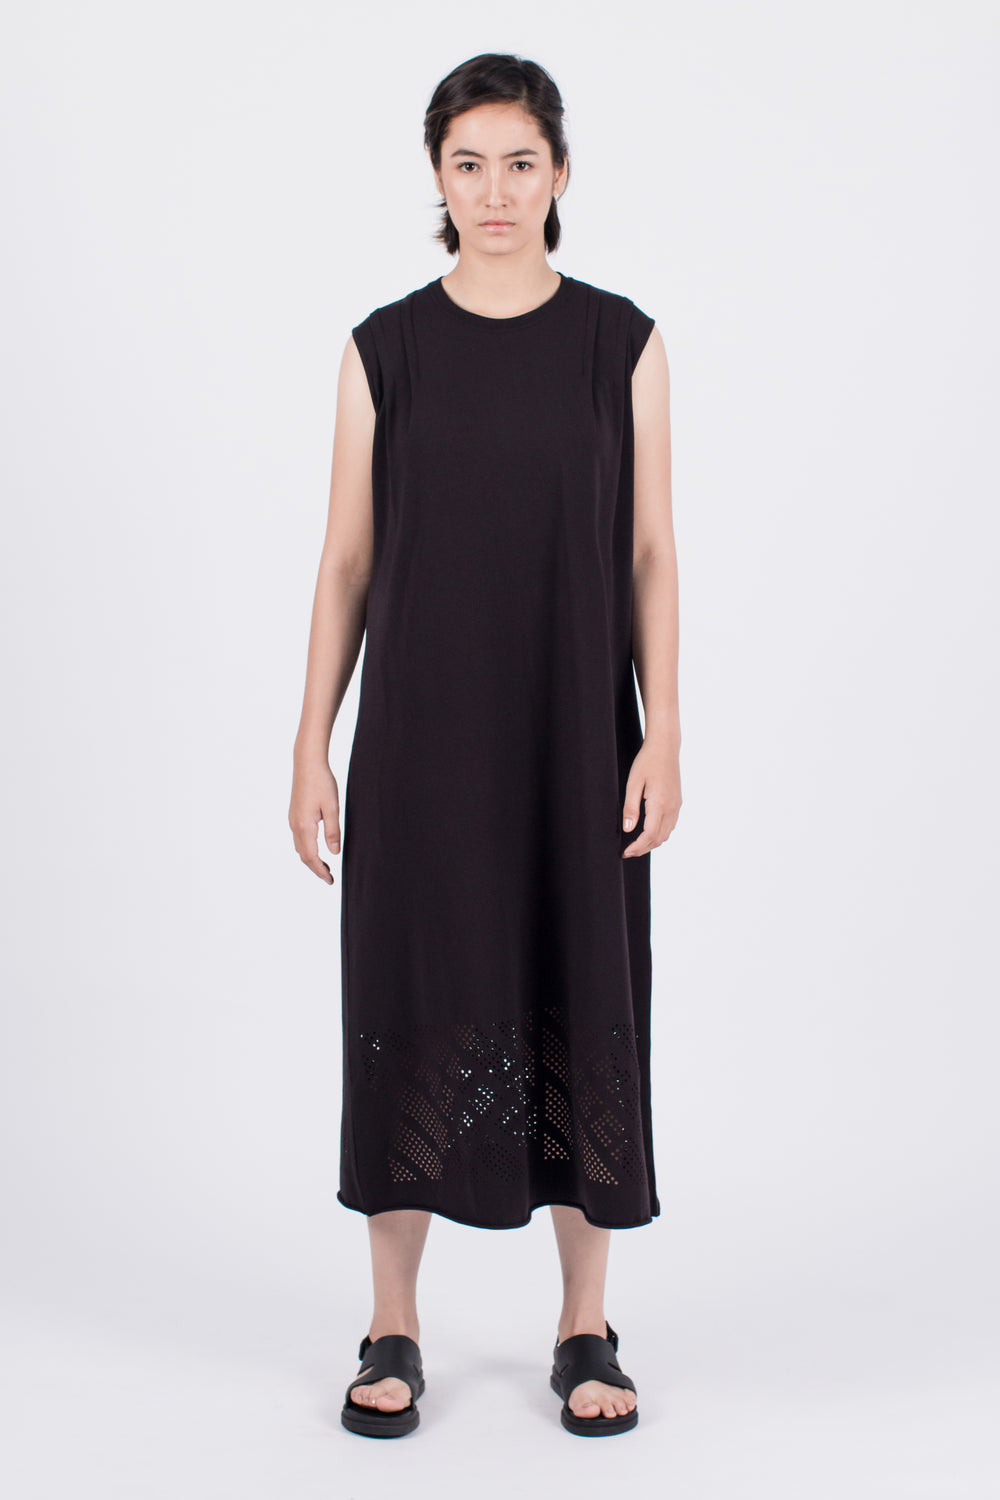 Muzca MZC Supima Dress Modest Loose Fitting Black Midi Sleeveless Dress with Embroidery in Cotton and Spandex